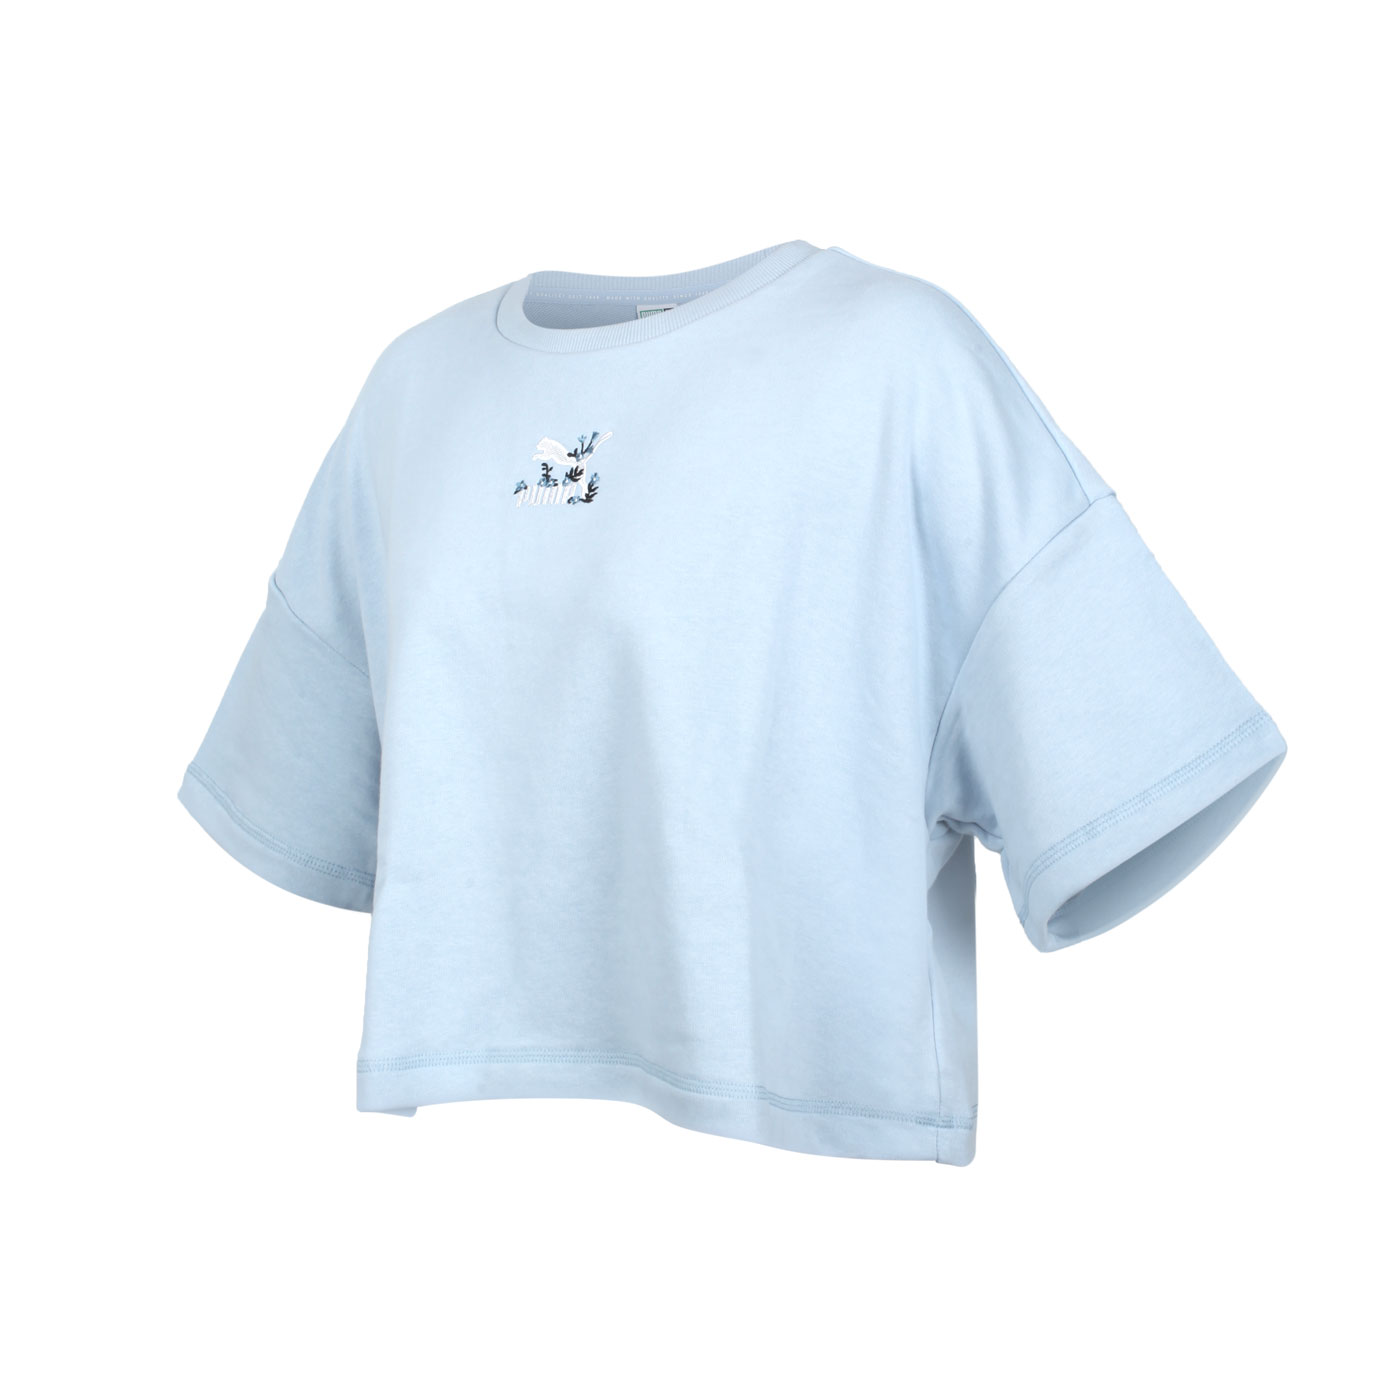 PUMA 女款流行系列Floral短袖T恤 53313161 - 馬卡龍藍白